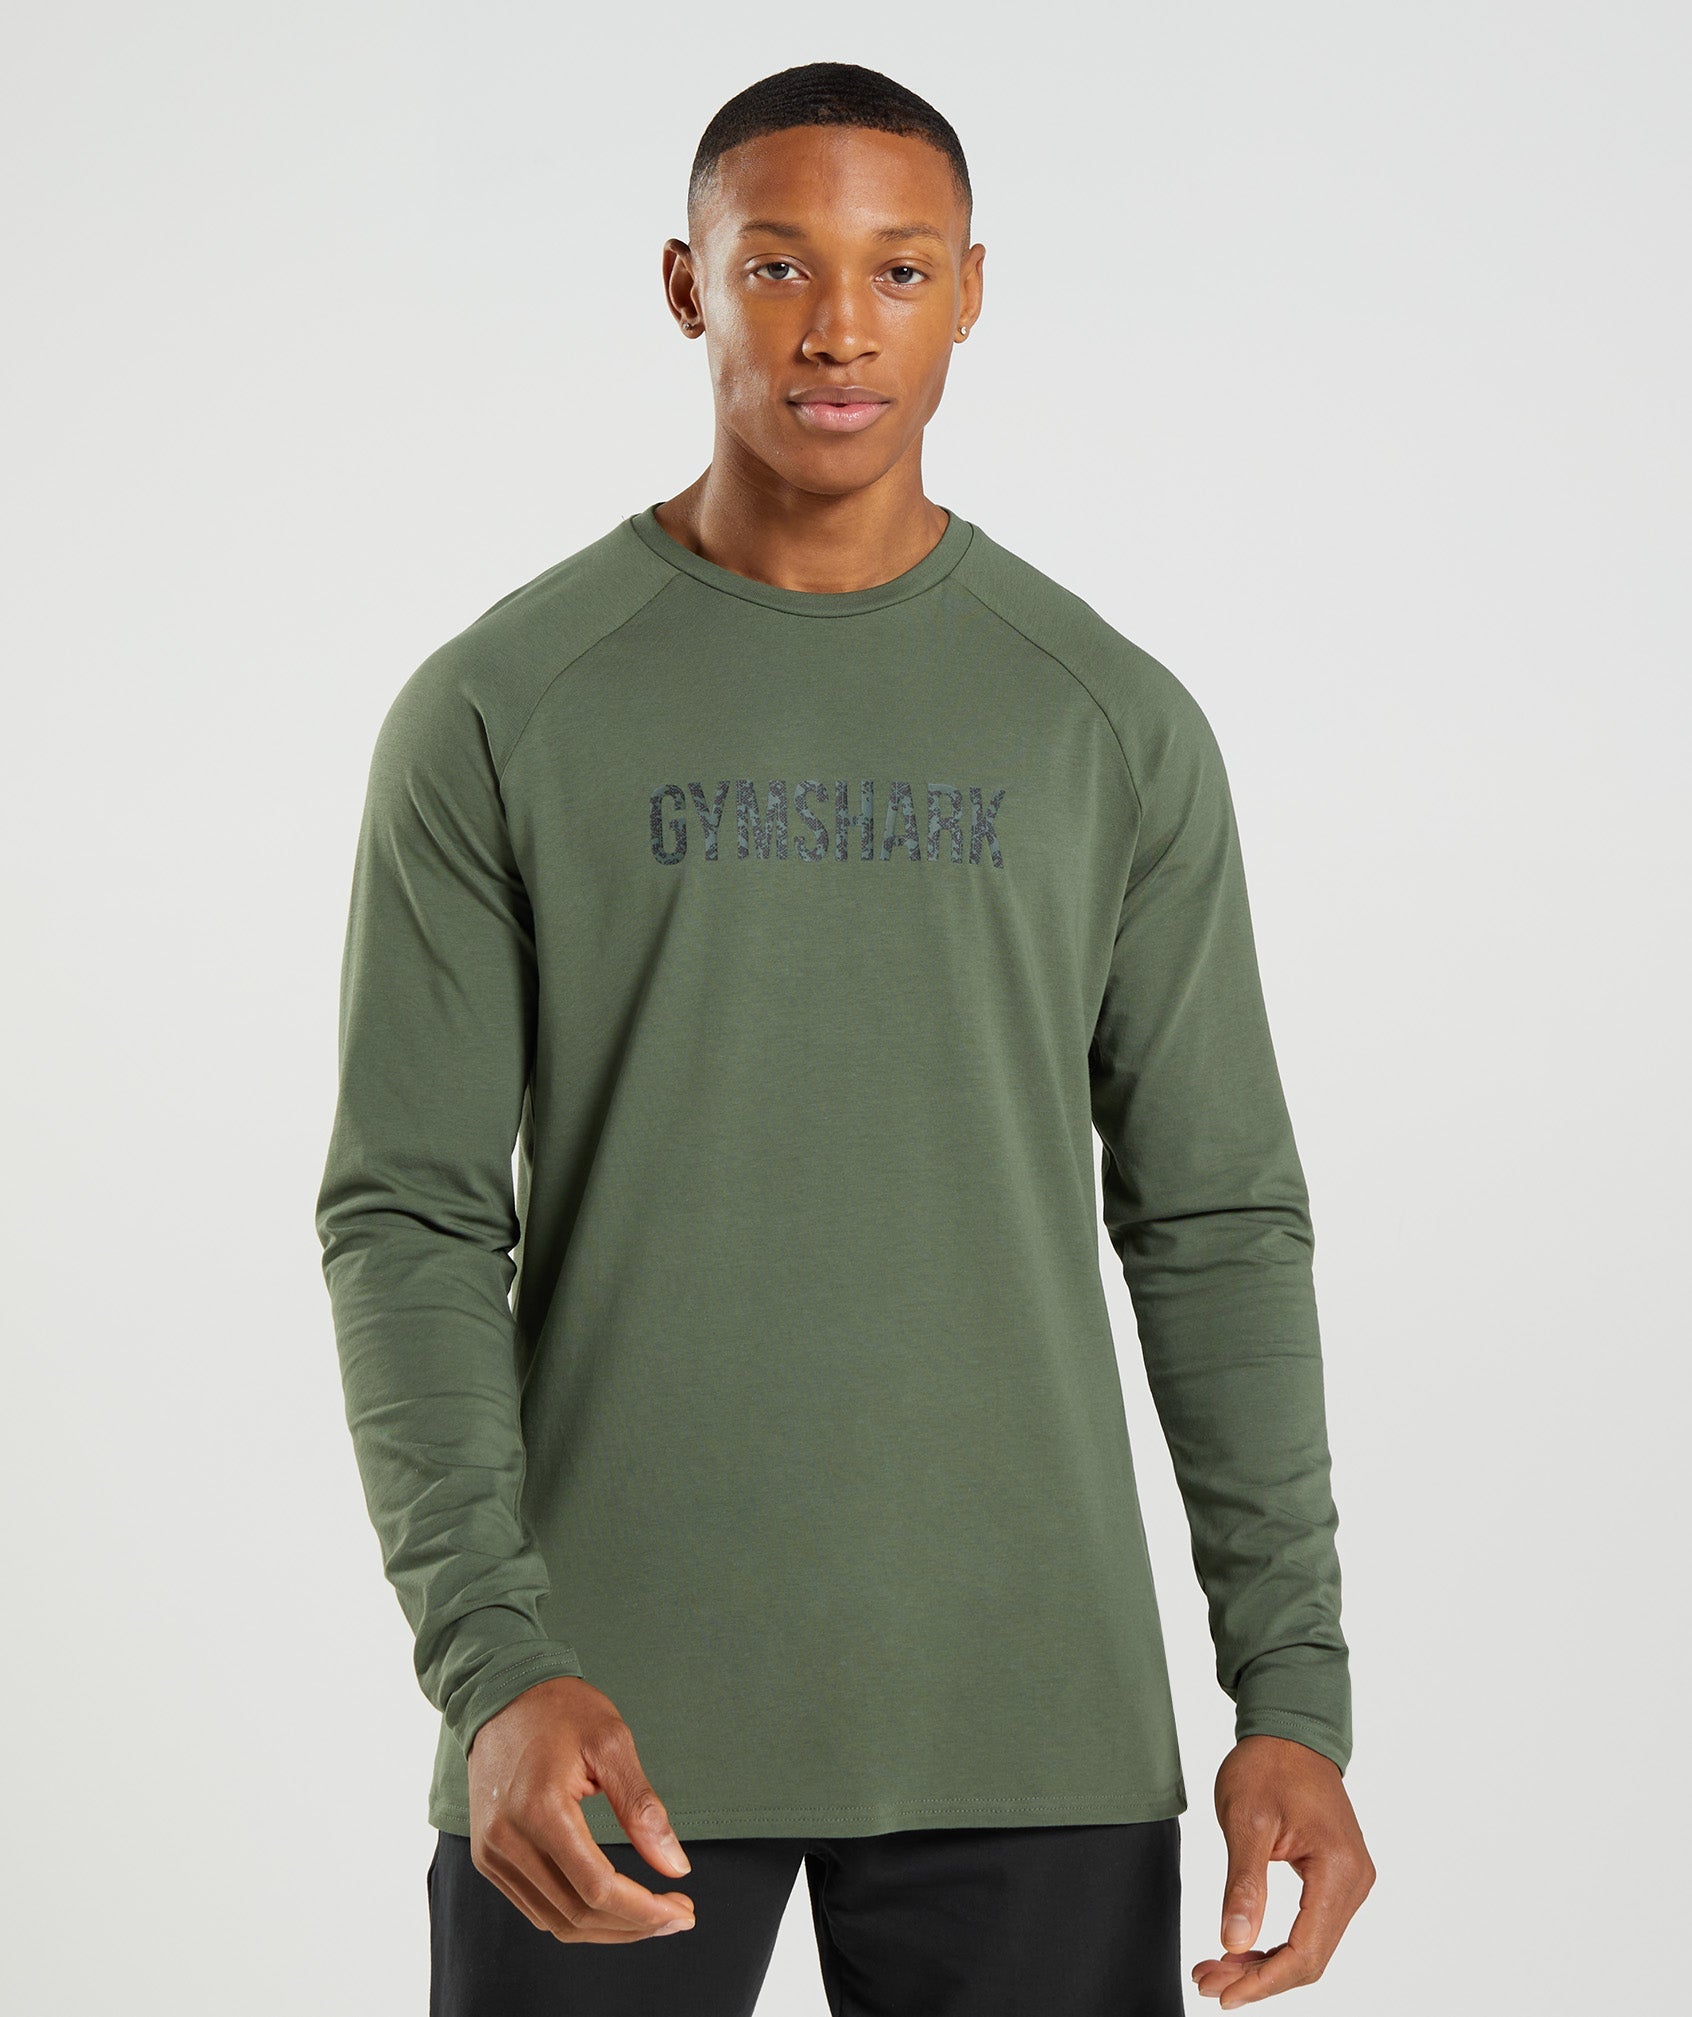 Gymshark Apollo T-Shirt - Dark Green